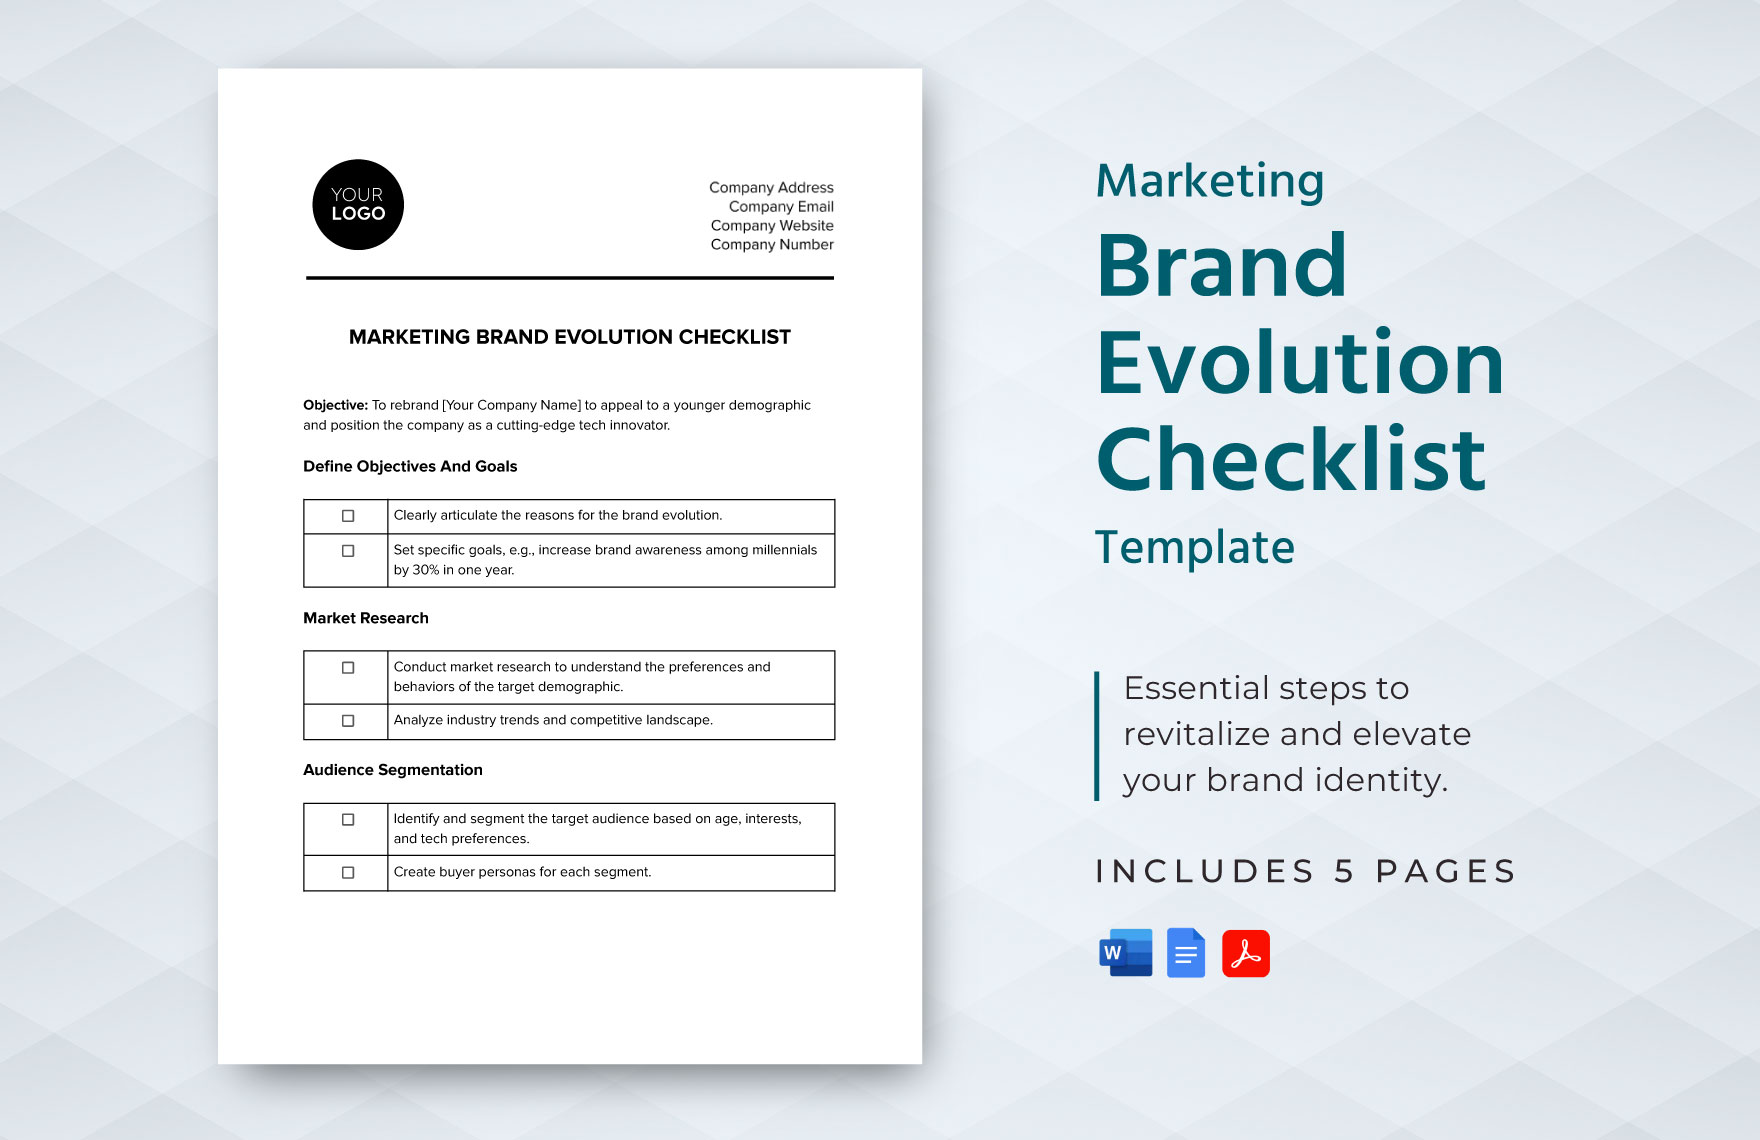 Marketing Brand Evolution Checklist Template in Word, Google Docs, PDF